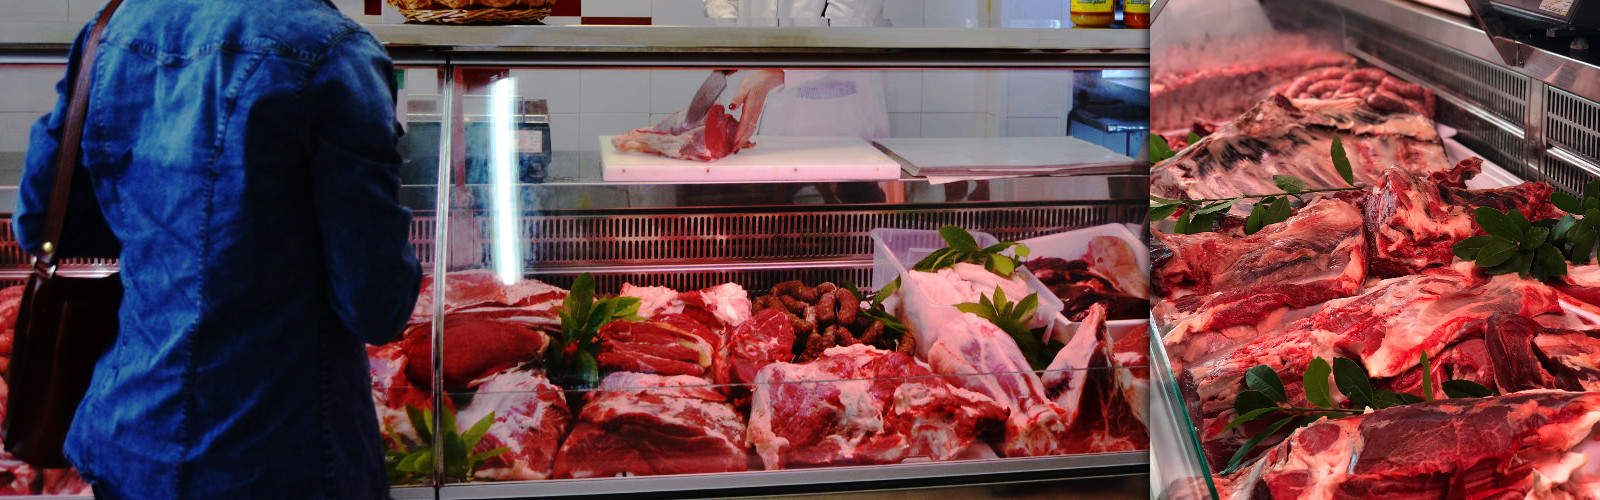 Macelleria Consalvi - Banco carne di produzione propria